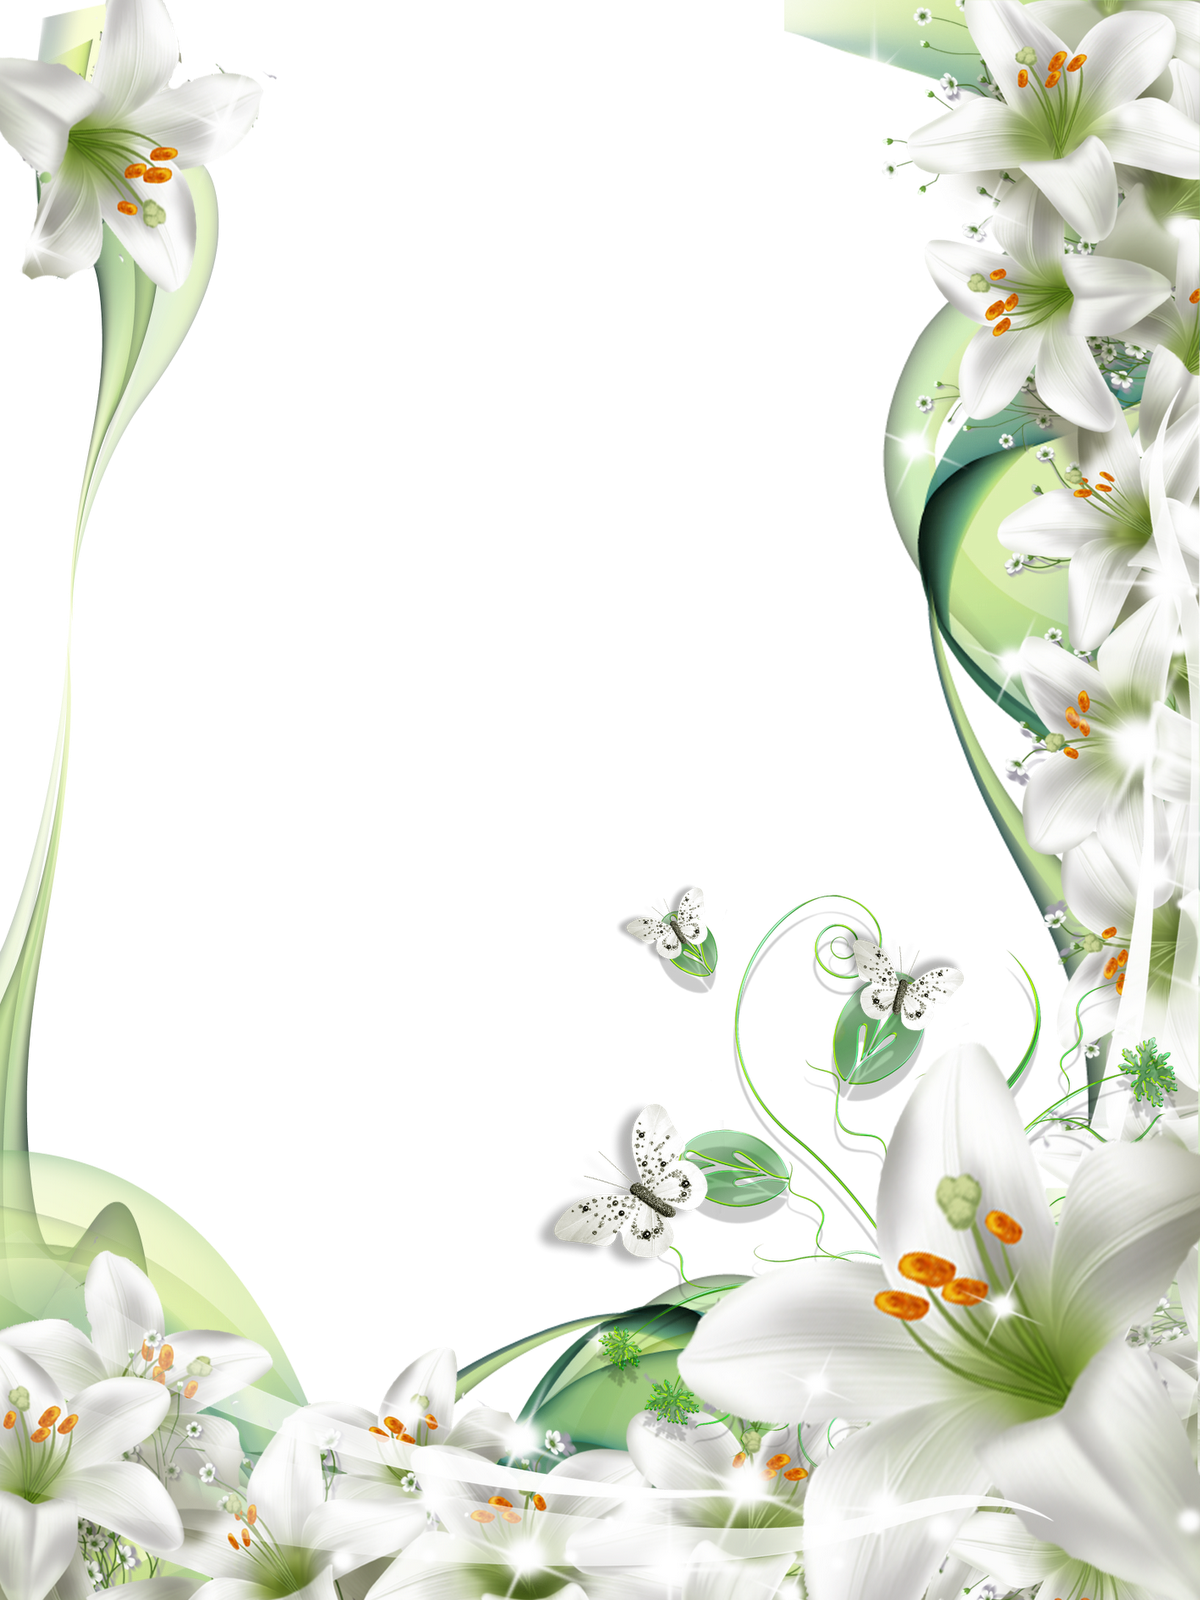 Lilies frame